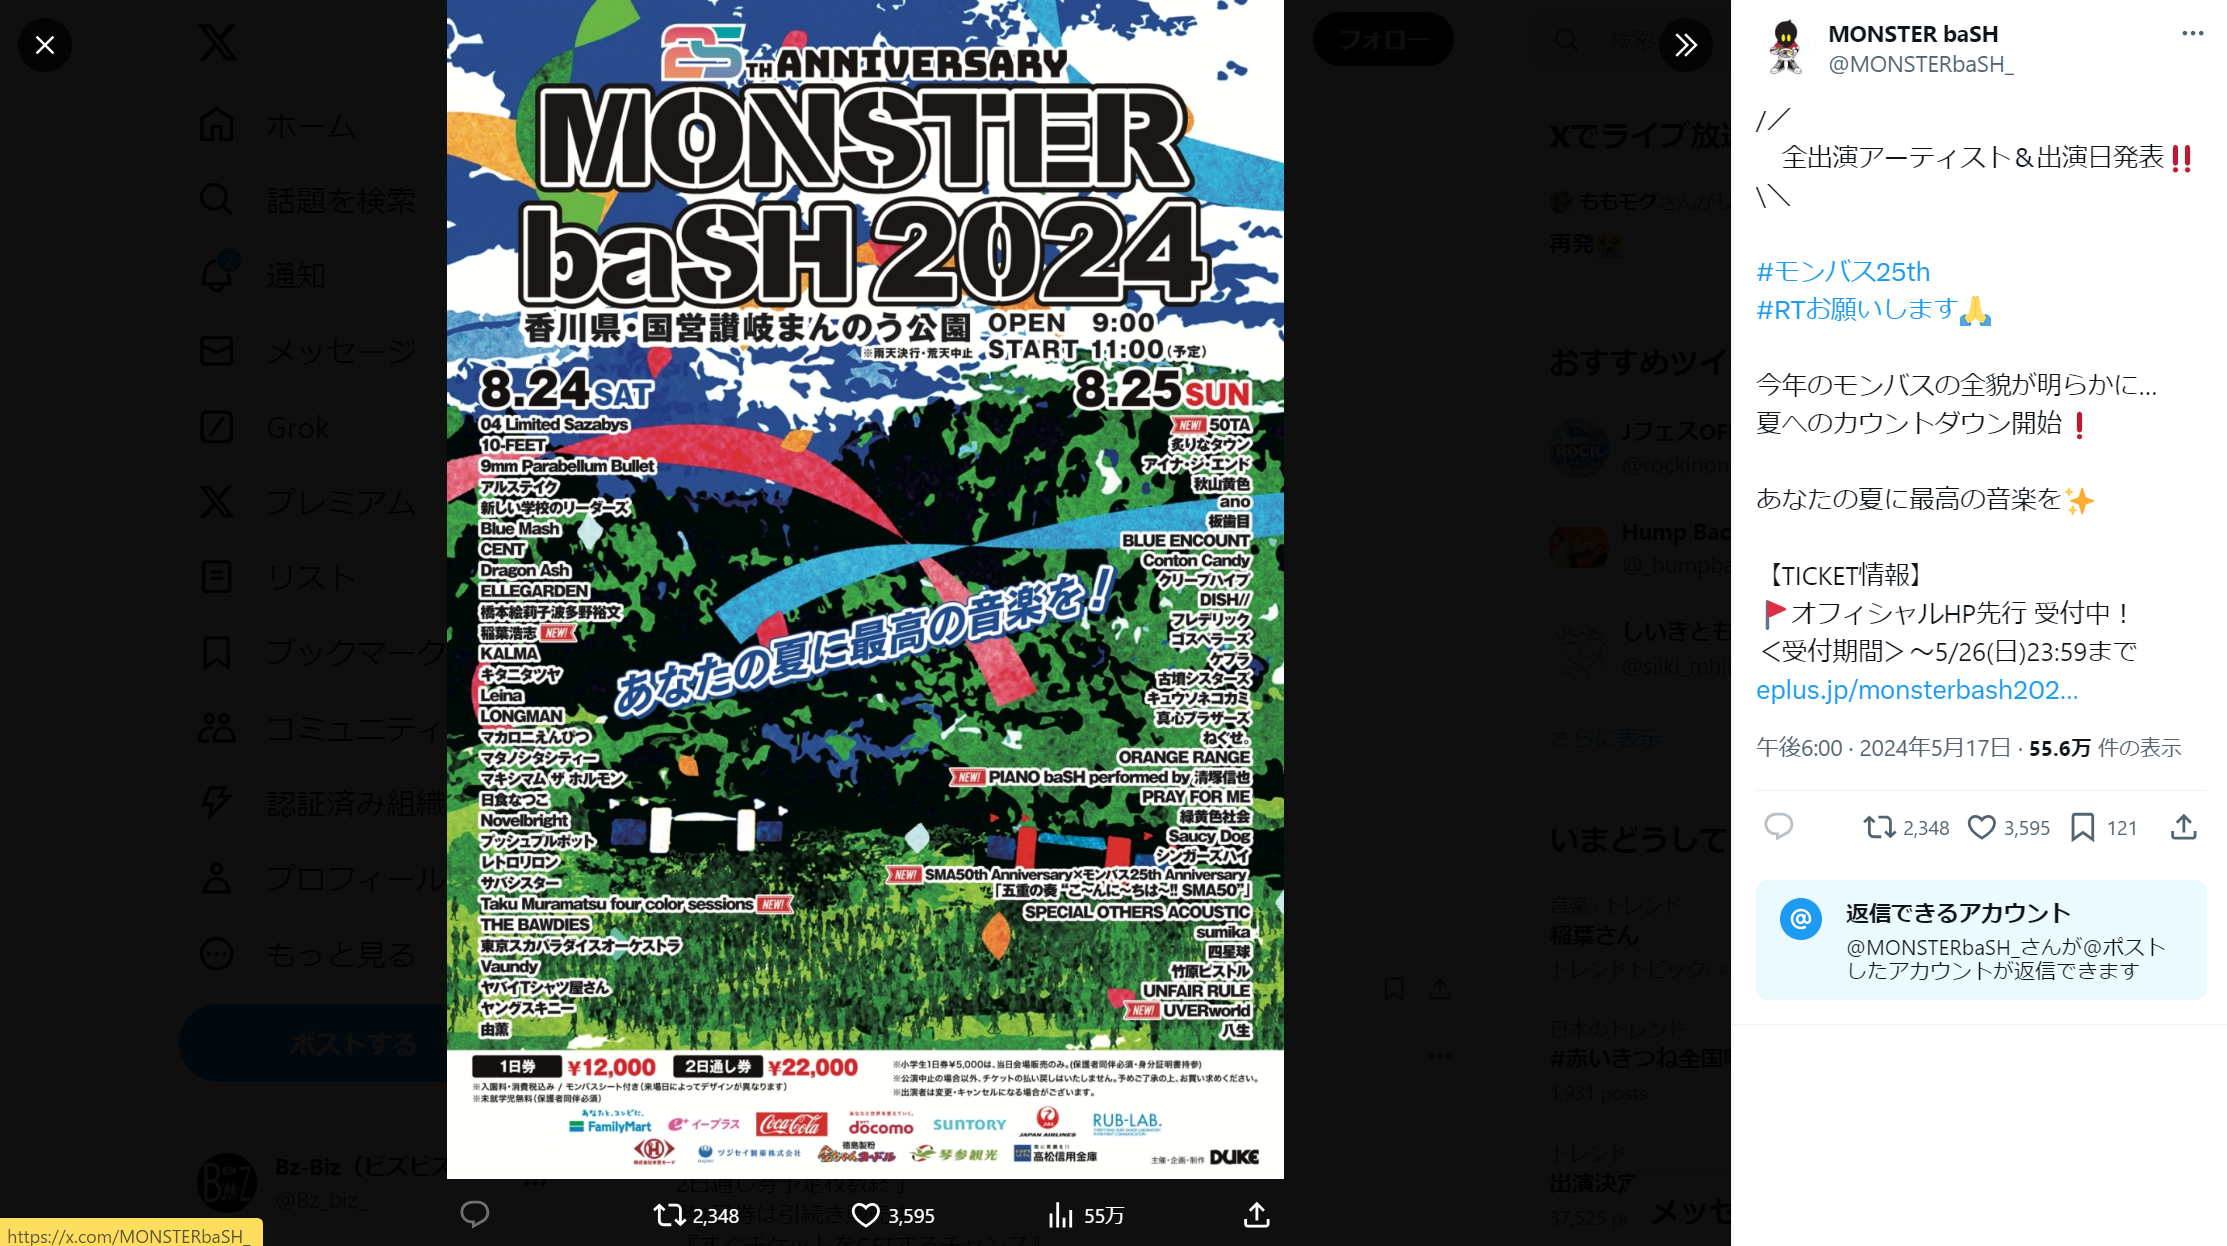 『MONSTER baSH 2024』全出演アーティスト発表のX投稿